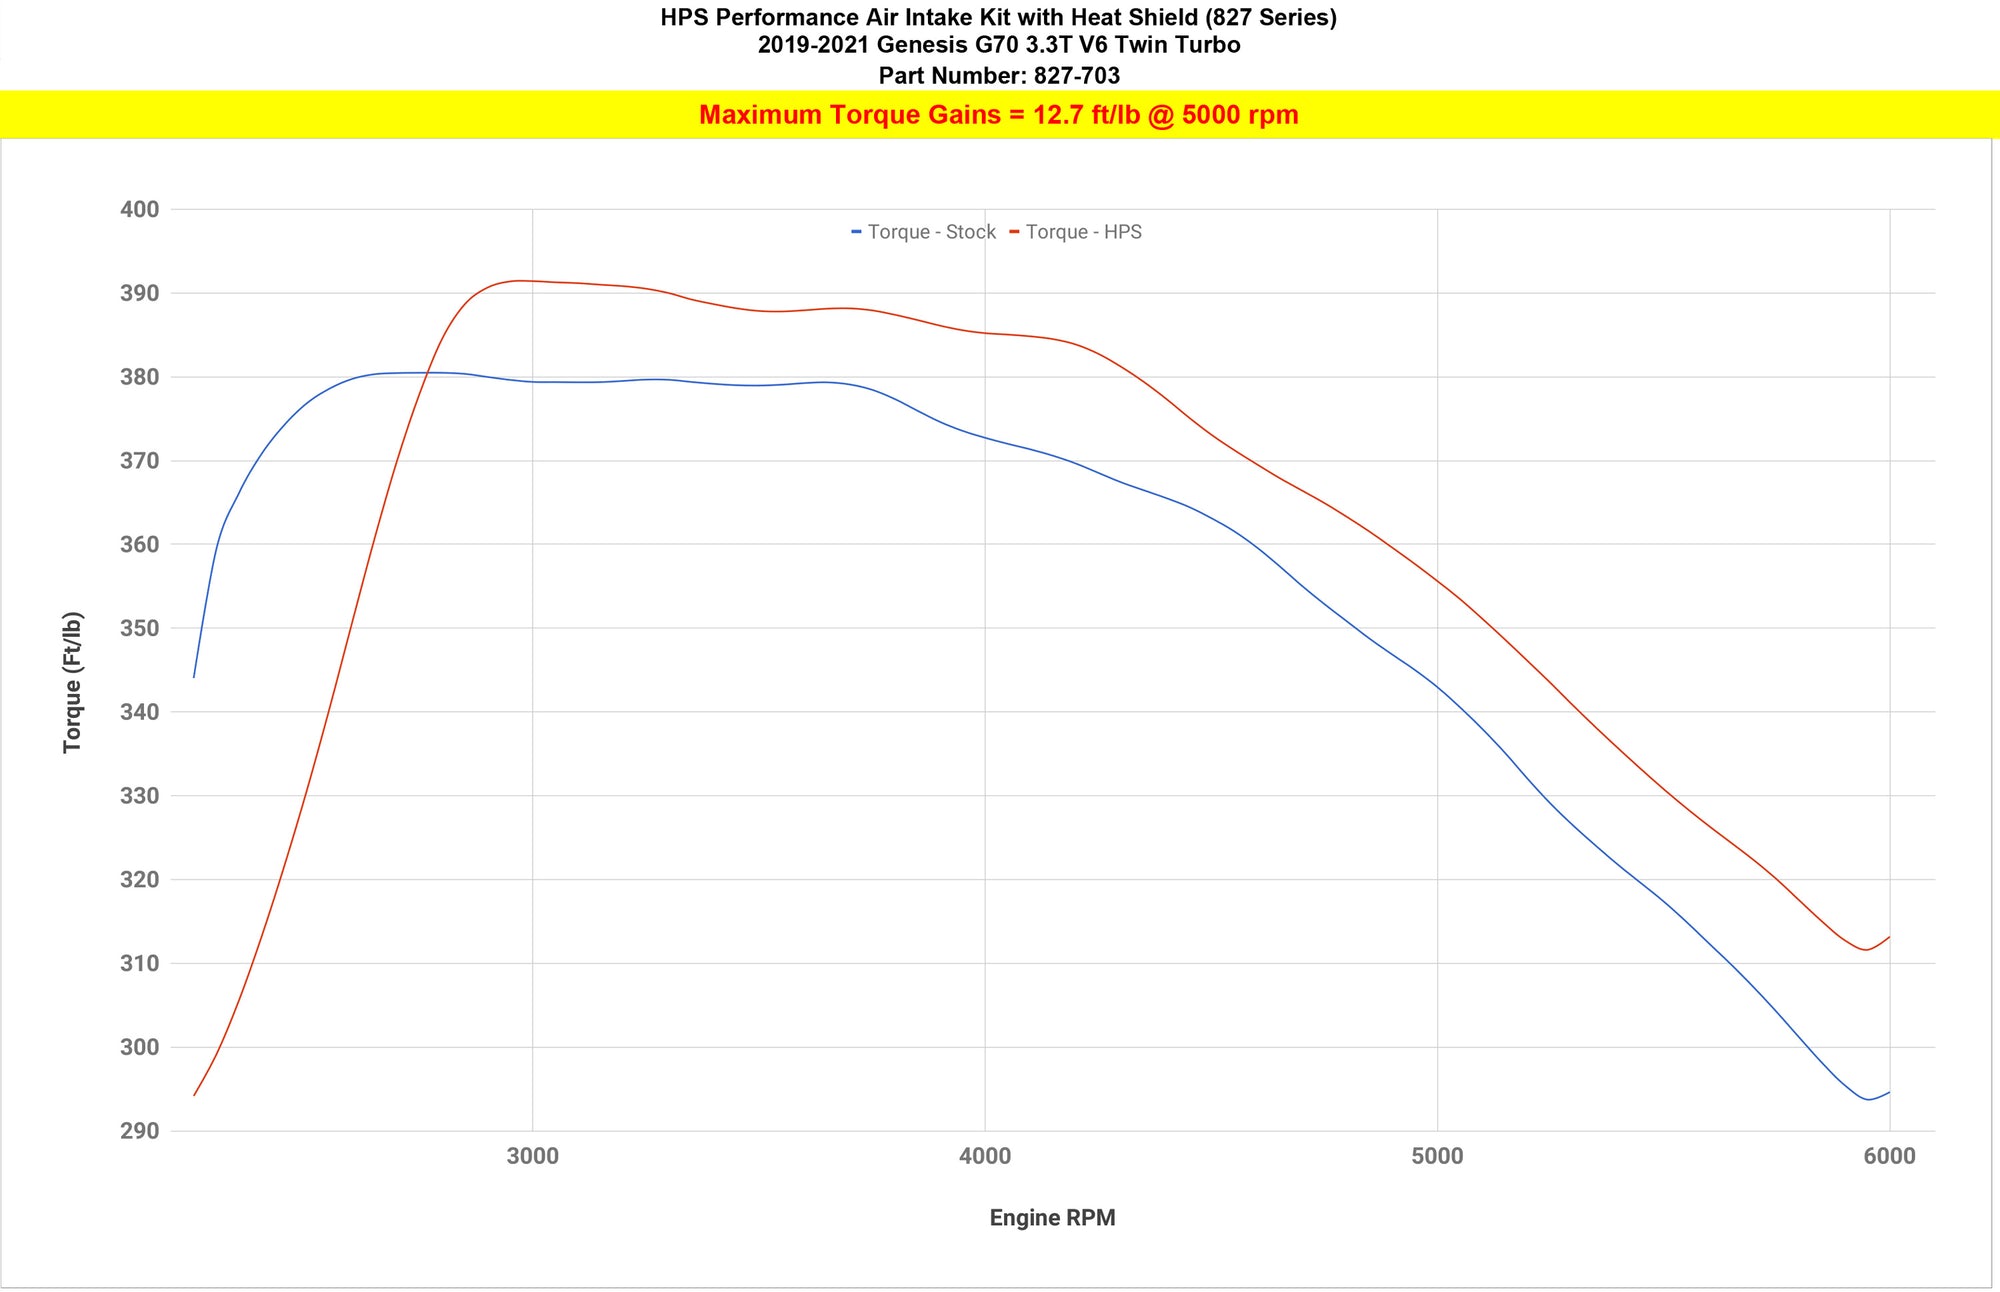 HPS Cold Air Intake Kit 827-703 increase torque +12.7 ft/lb on 2019-2021 Hyundai Genesis G70 3.3L V6 Twin Turbo